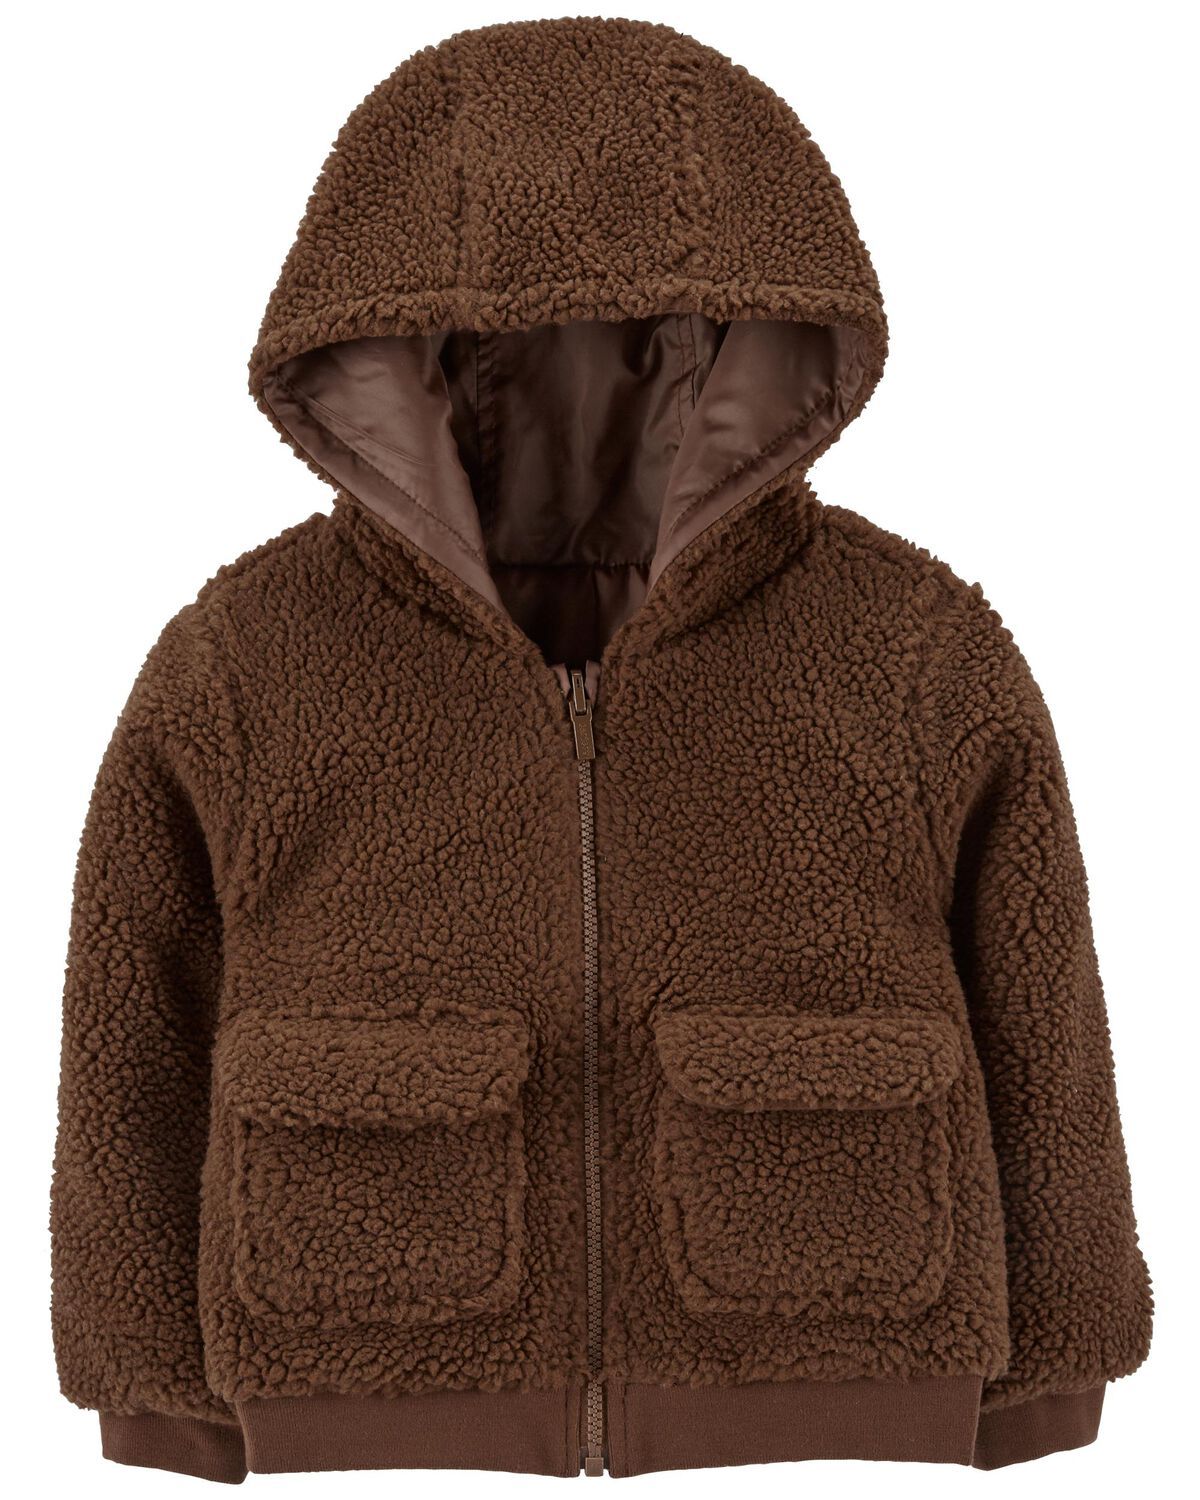 Brown Toddler Reversible Hooded Sherpa Jacket | carters.com | Carter's